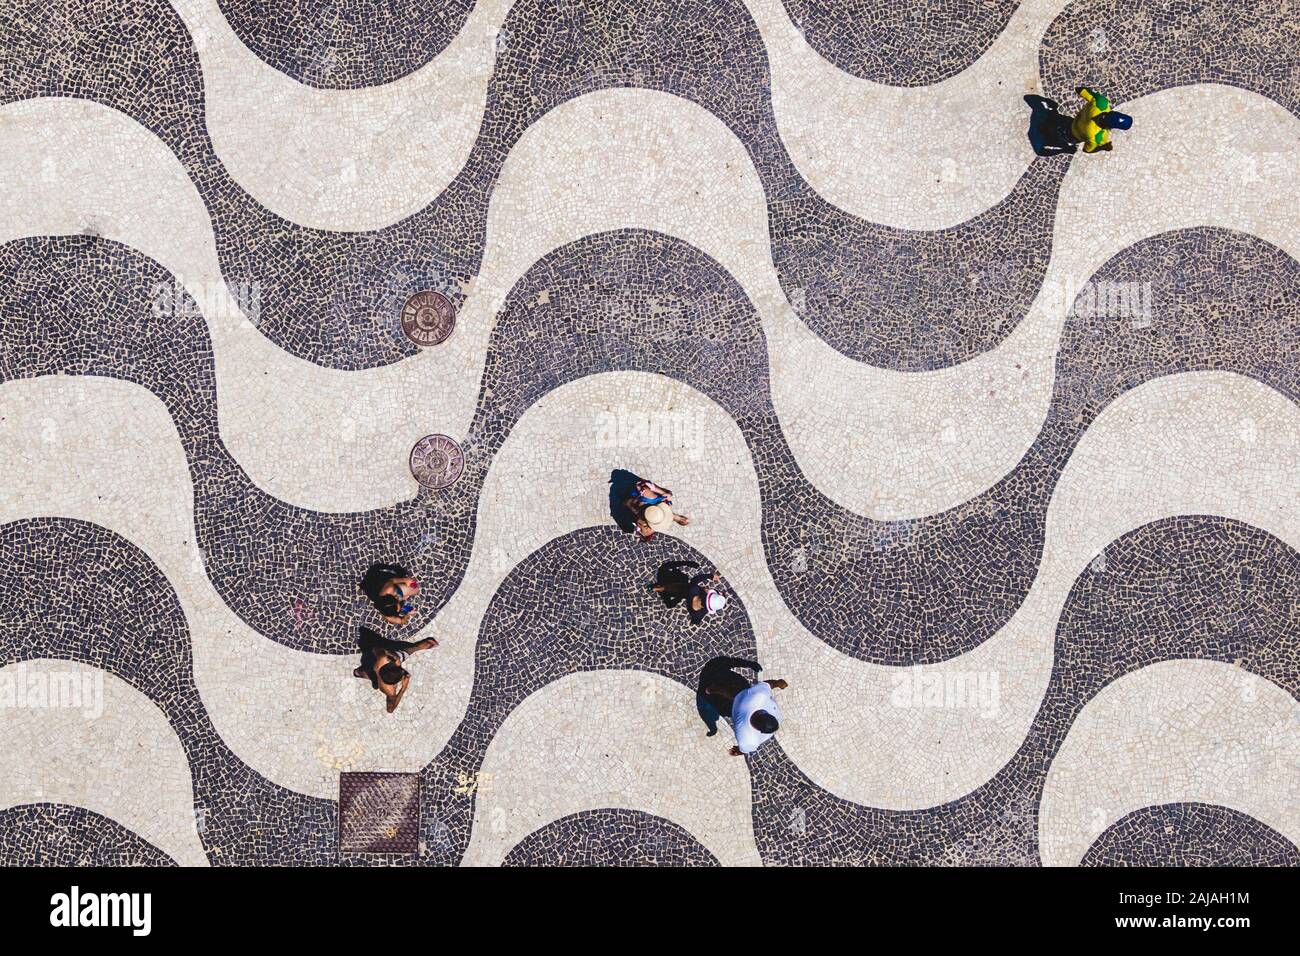 Rio de Janeiro, Brazil, top aerial view of people walking on the iconic Copacabana Beach mosaic sidewalk. Stock Photo